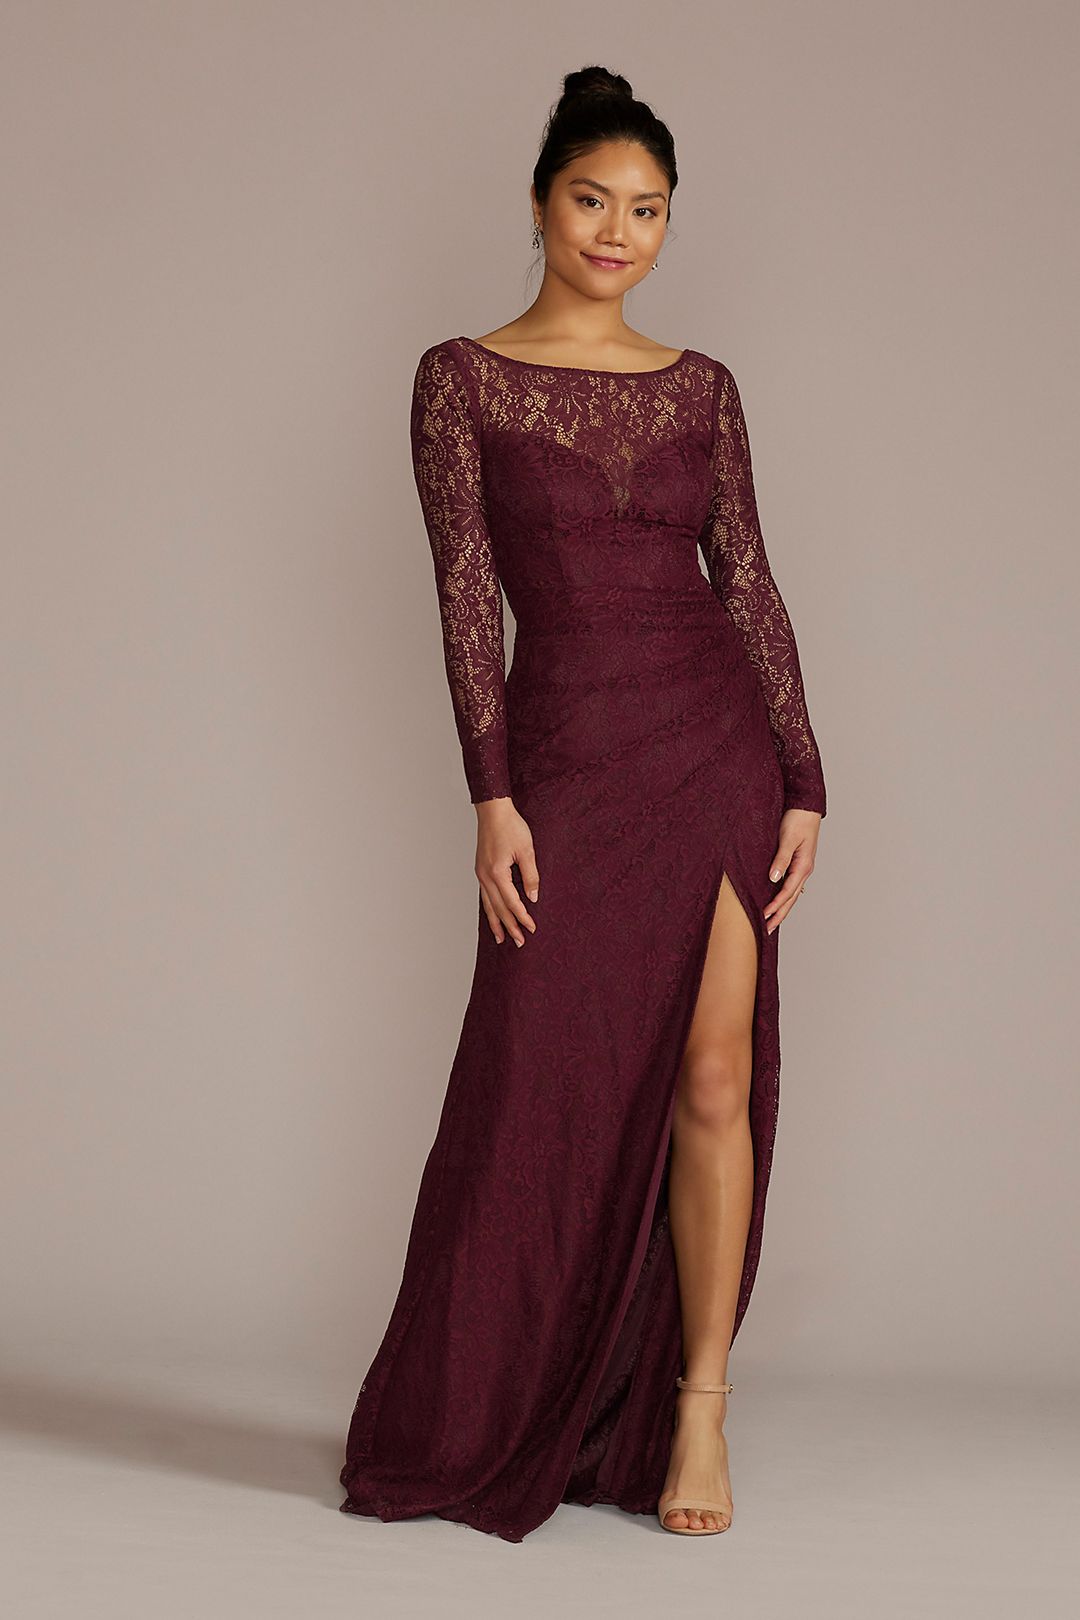 Long-Sleeve Lace Bridesmaid Dress with Slit Image 1